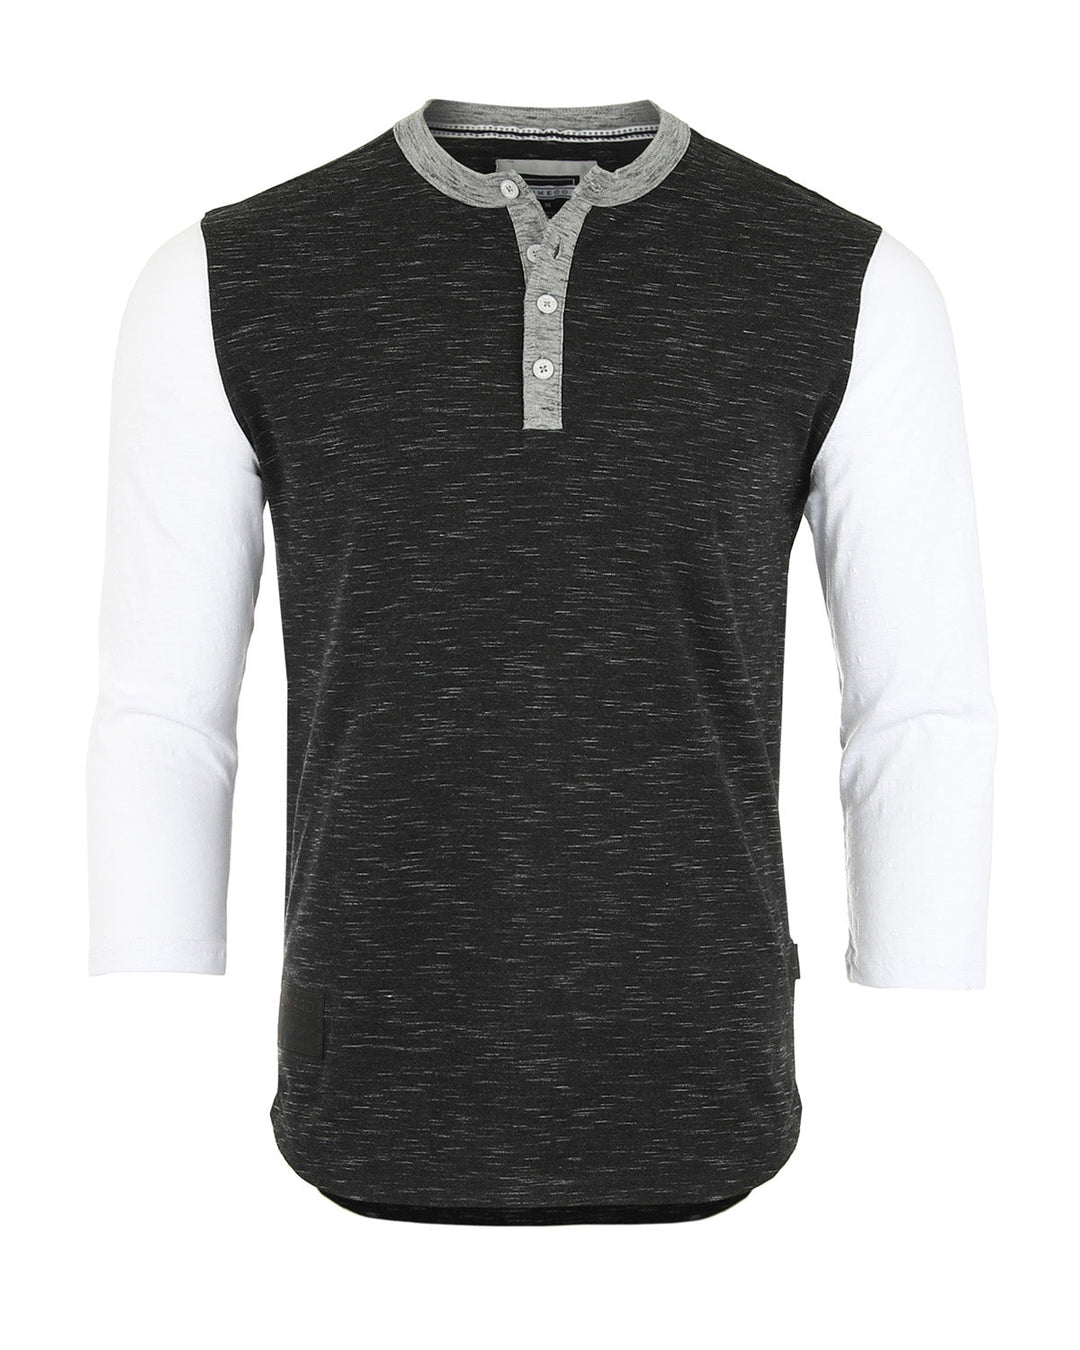 ZIMEGO Men's 3/4 Sleeve Black & White Baseball Henley – Casual Athletic Button Crewneck Shirts-1